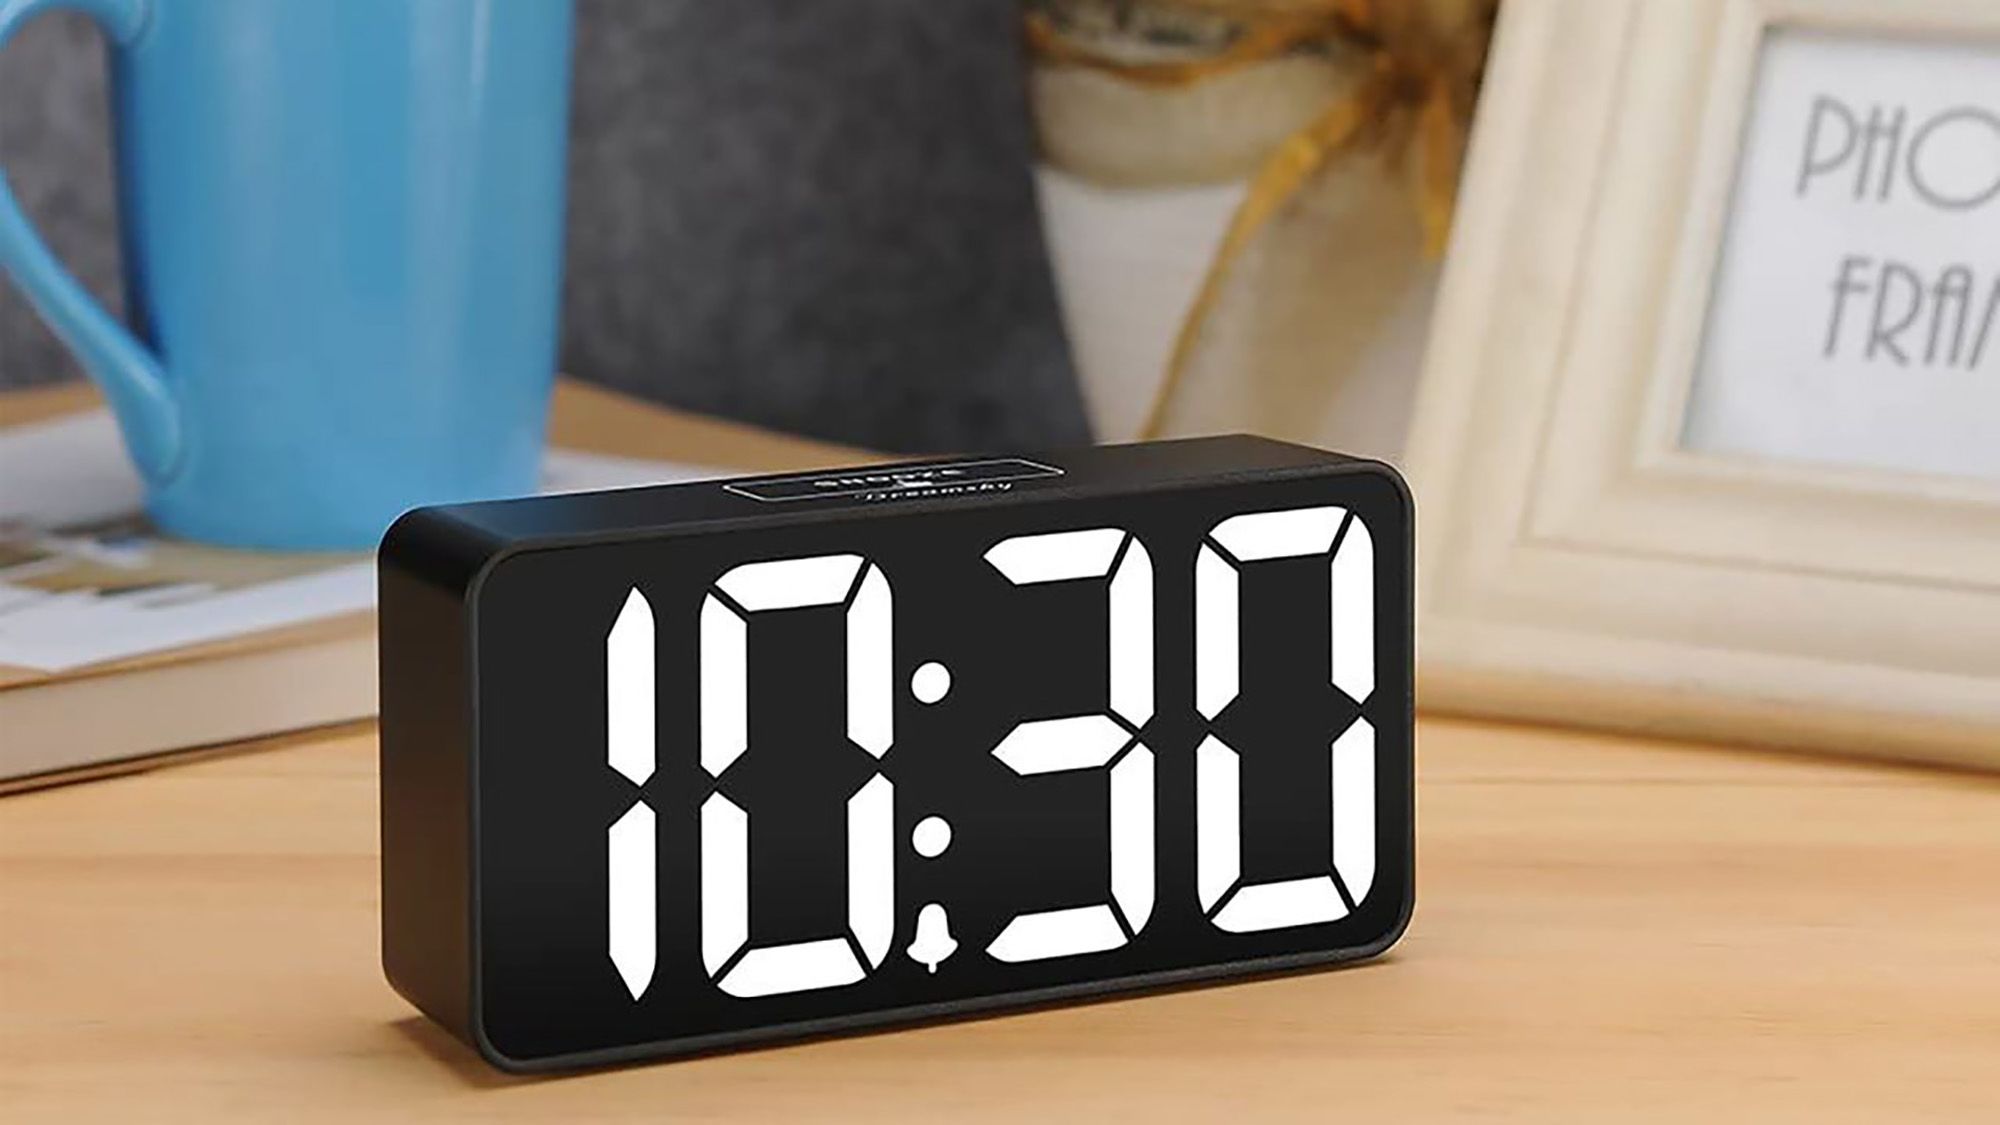 Dreamsky Compact Digital Alarm Clock (All White) - User Review 